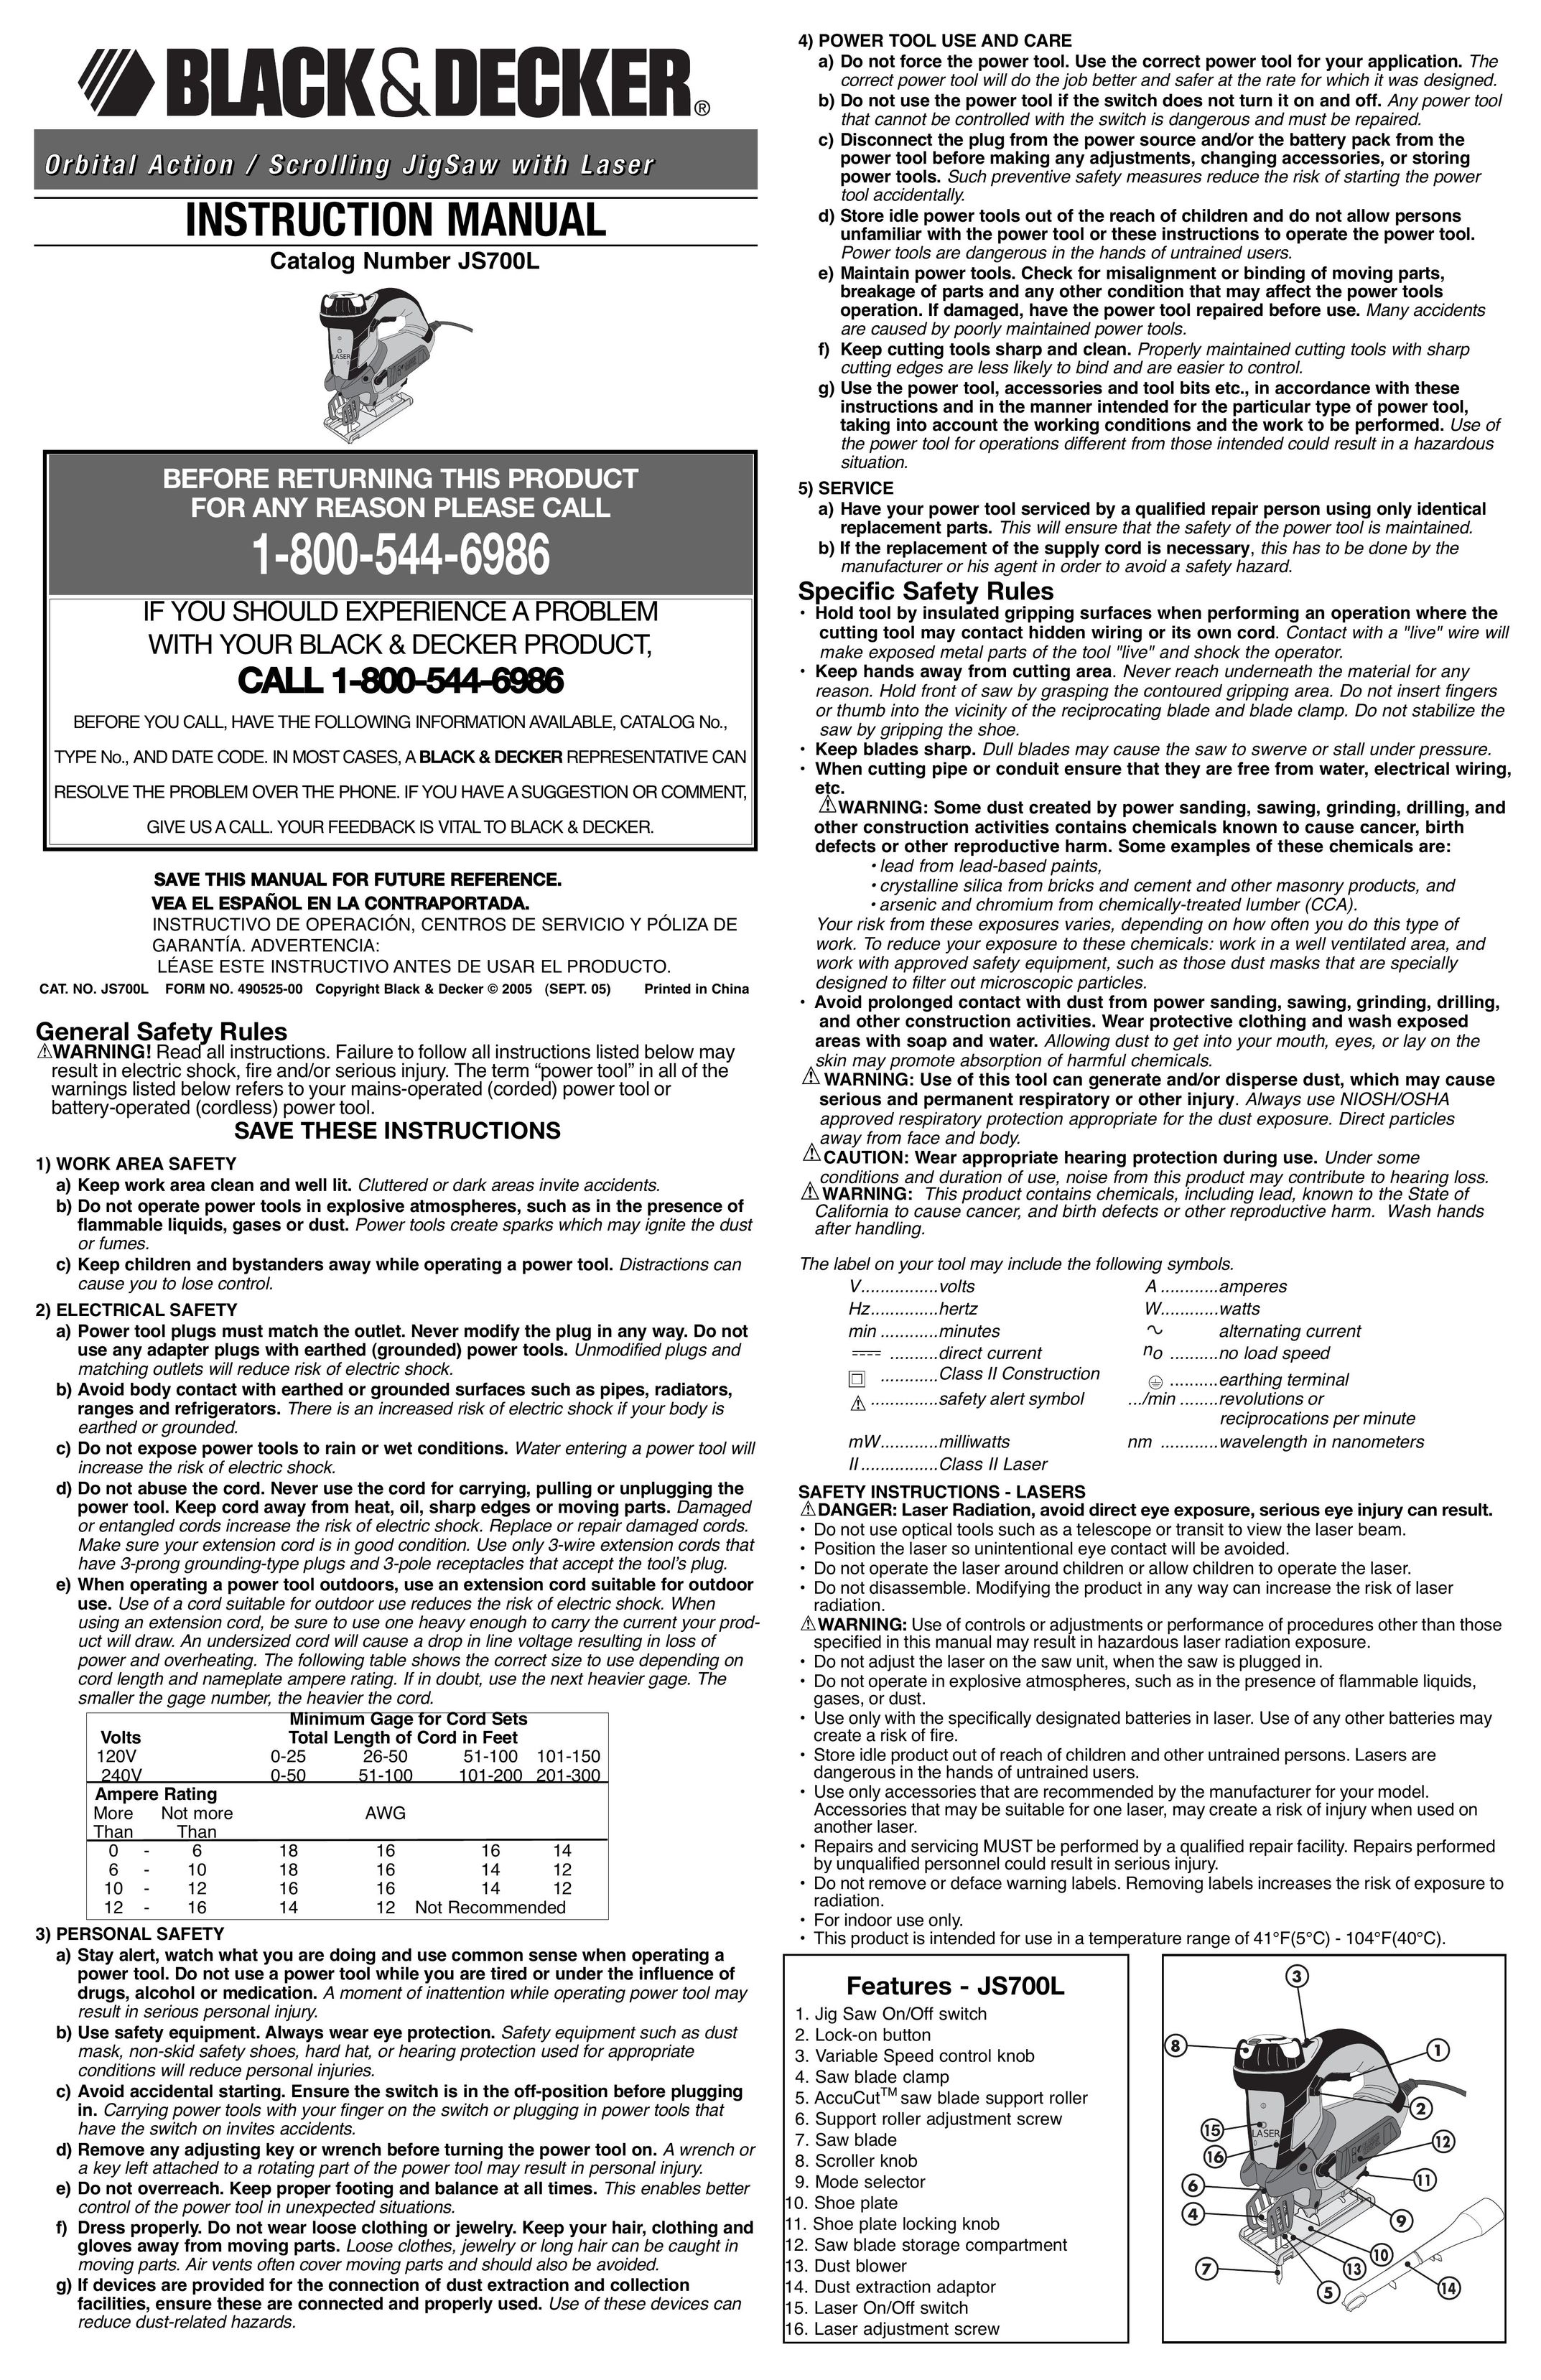 Black & Decker 490525-00 Saw User Manual